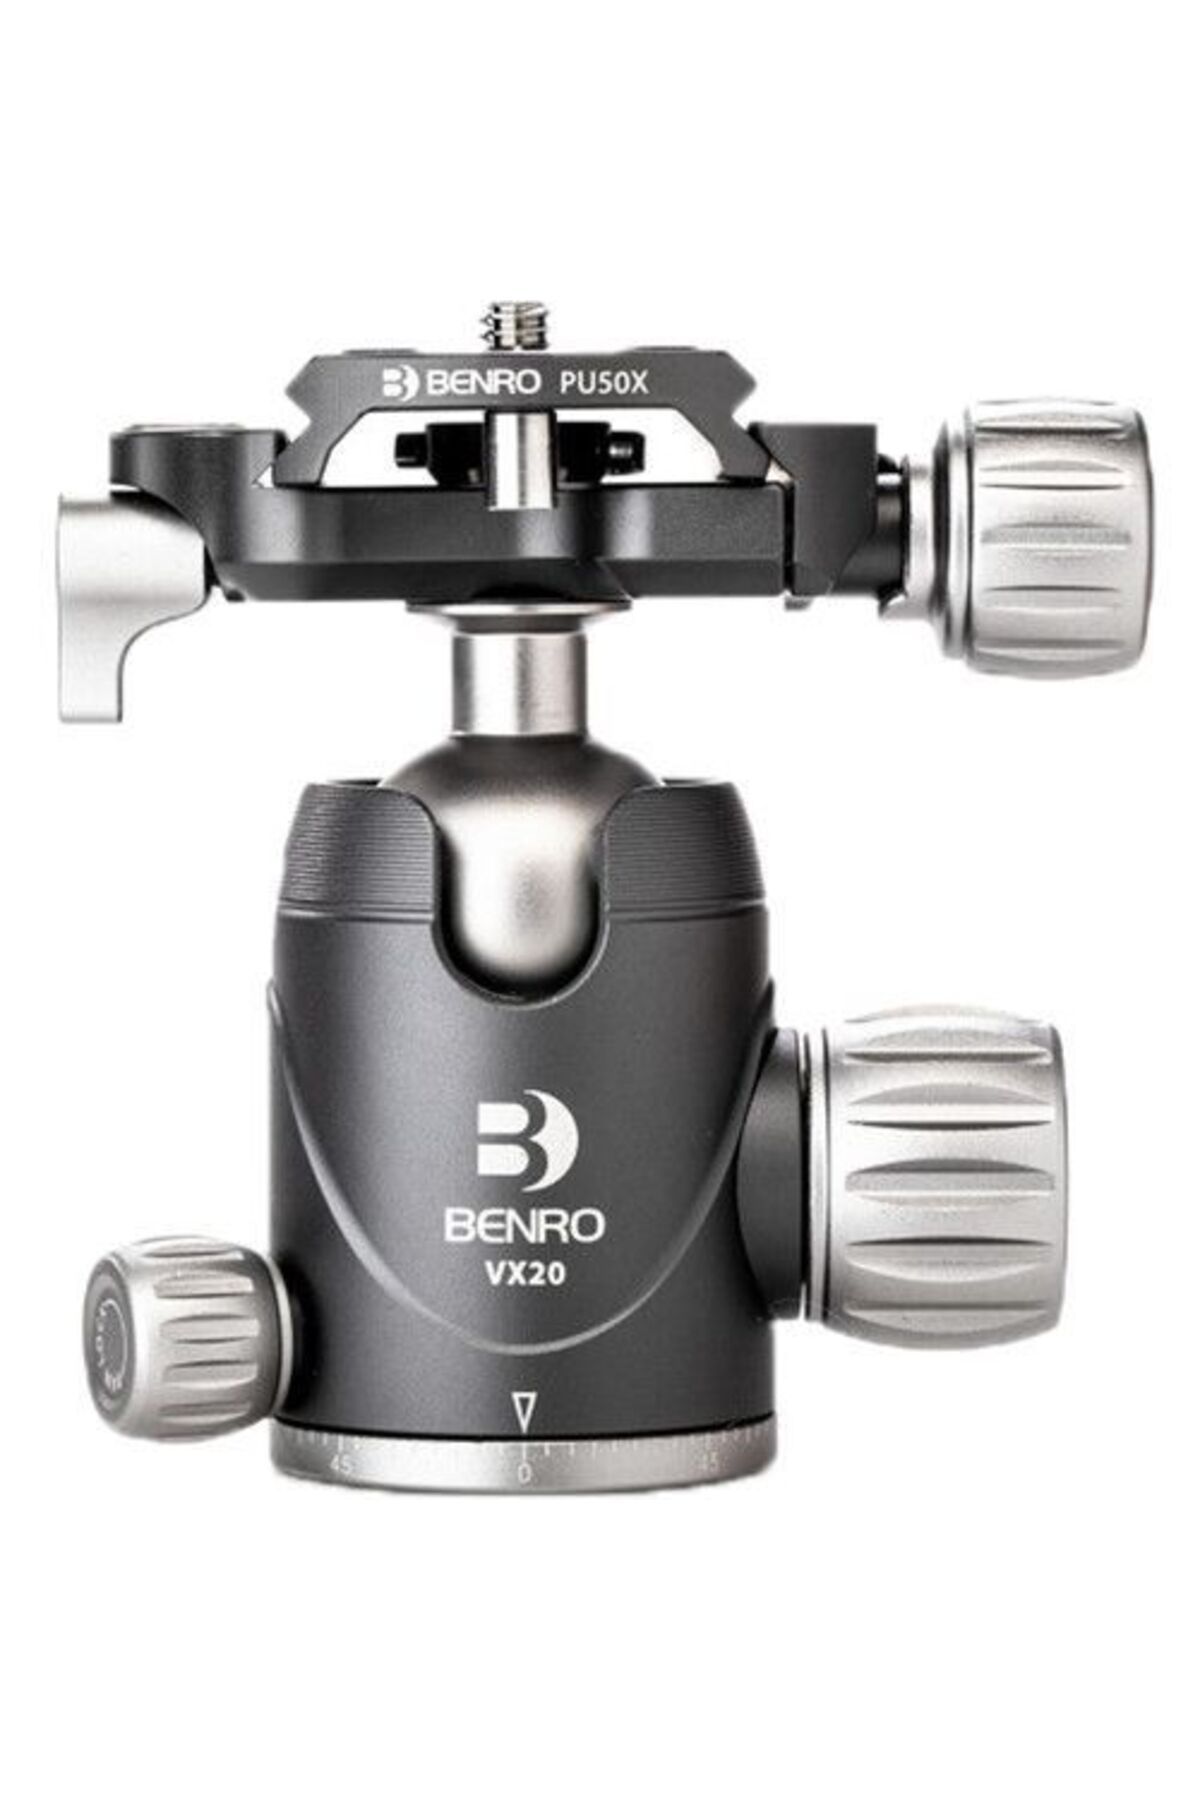 Benro Vx20 Two Series Arca-type Magnesium Ball Head